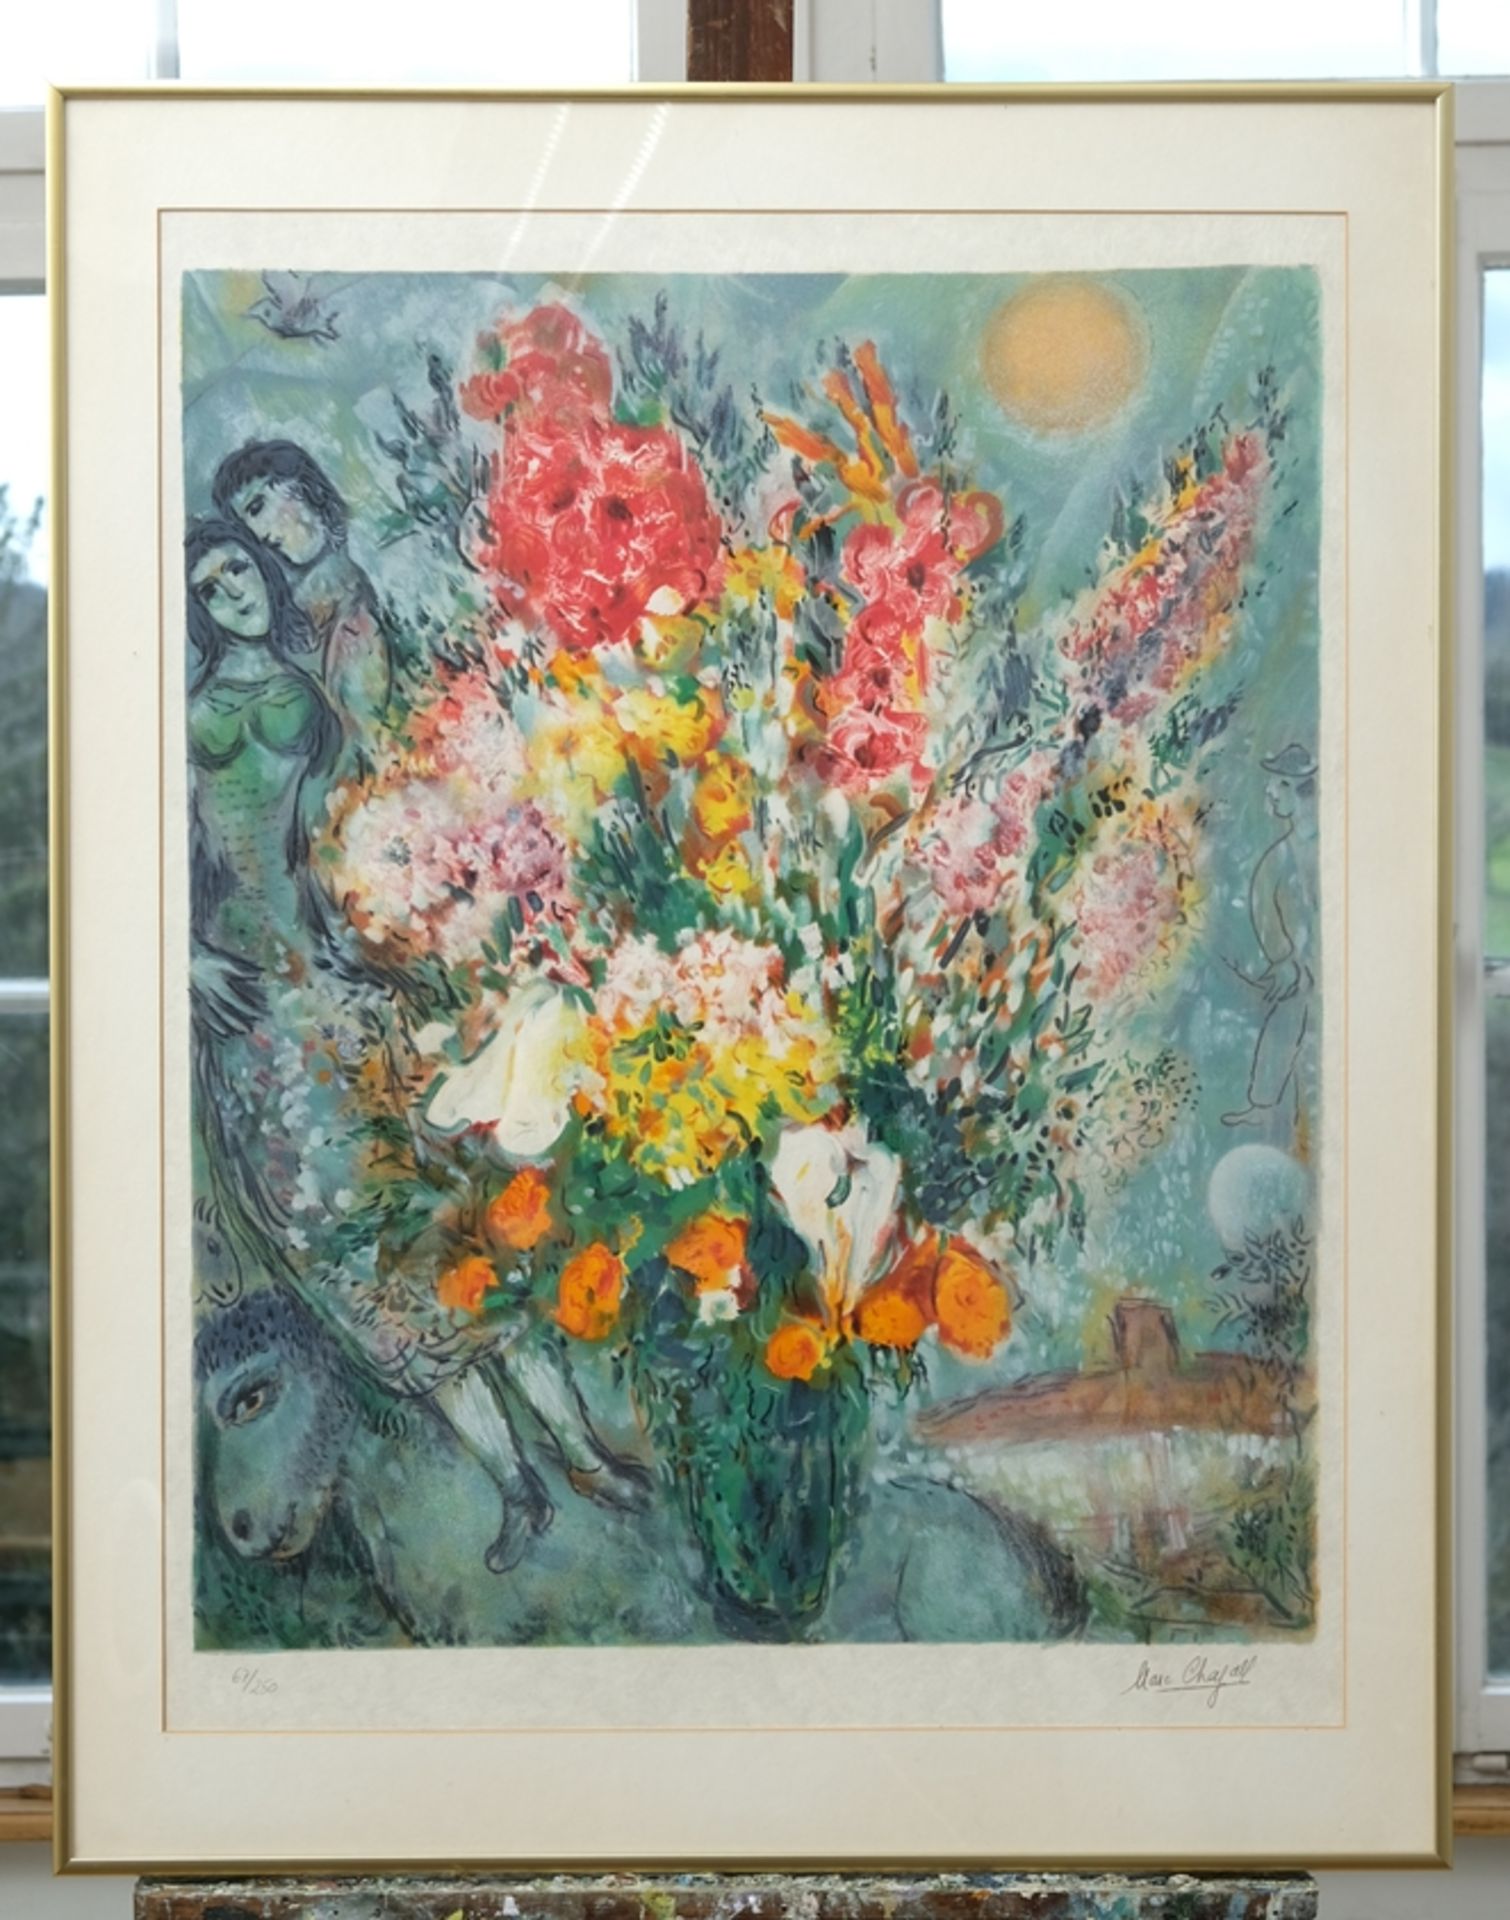 Chagall, Marc (1887-1985) "Bouquet de Fleurs", no year, colour lithograph on Japanese paper.  - Image 2 of 4